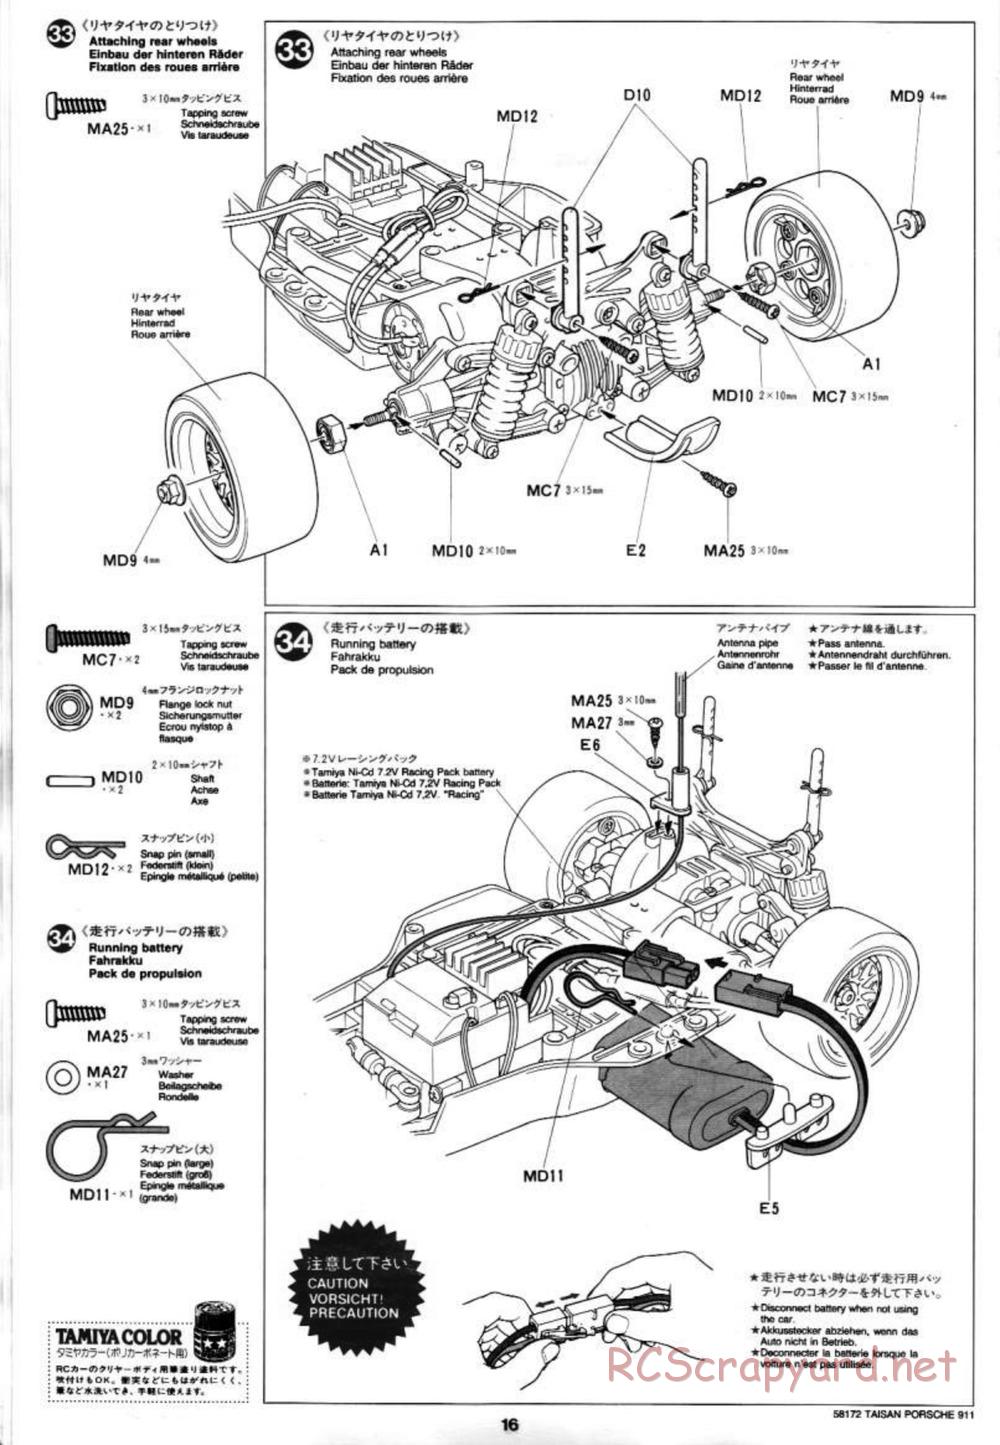 Tamiya - Taisan Starcard Porsche 911 GT2 - TA-02SW Chassis - Manual - Page 16